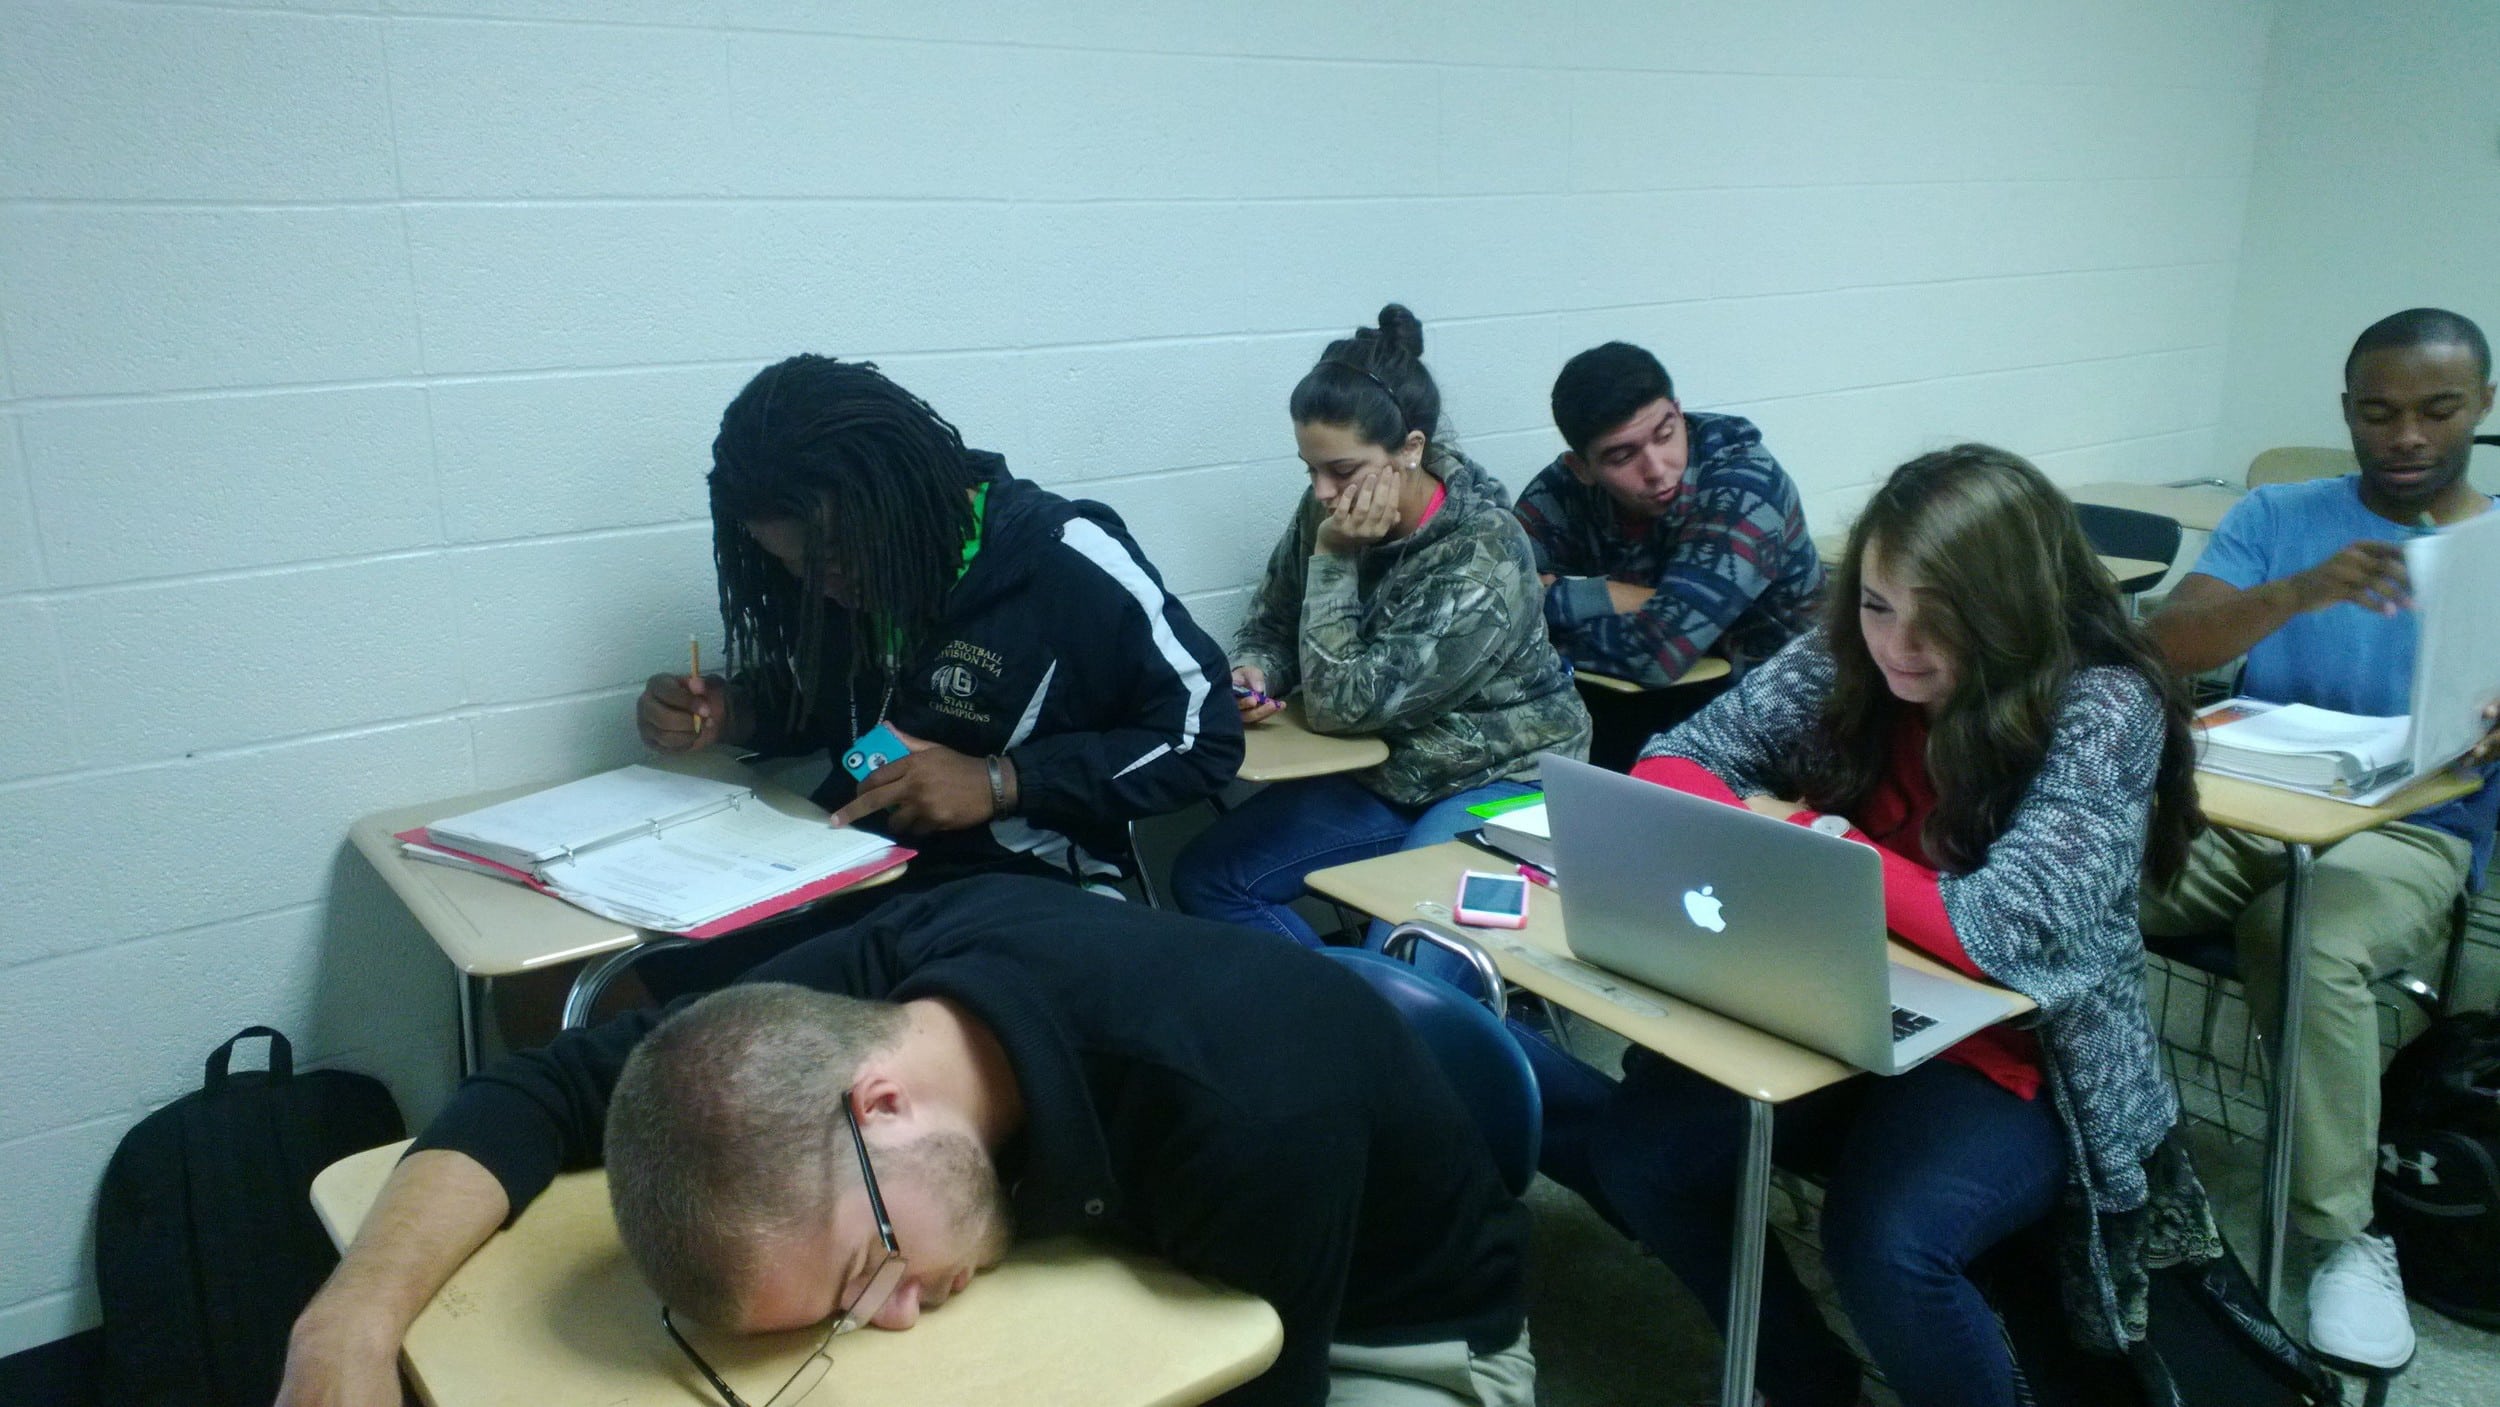 Freshman William McDonald (bottom left) sleeps during class.